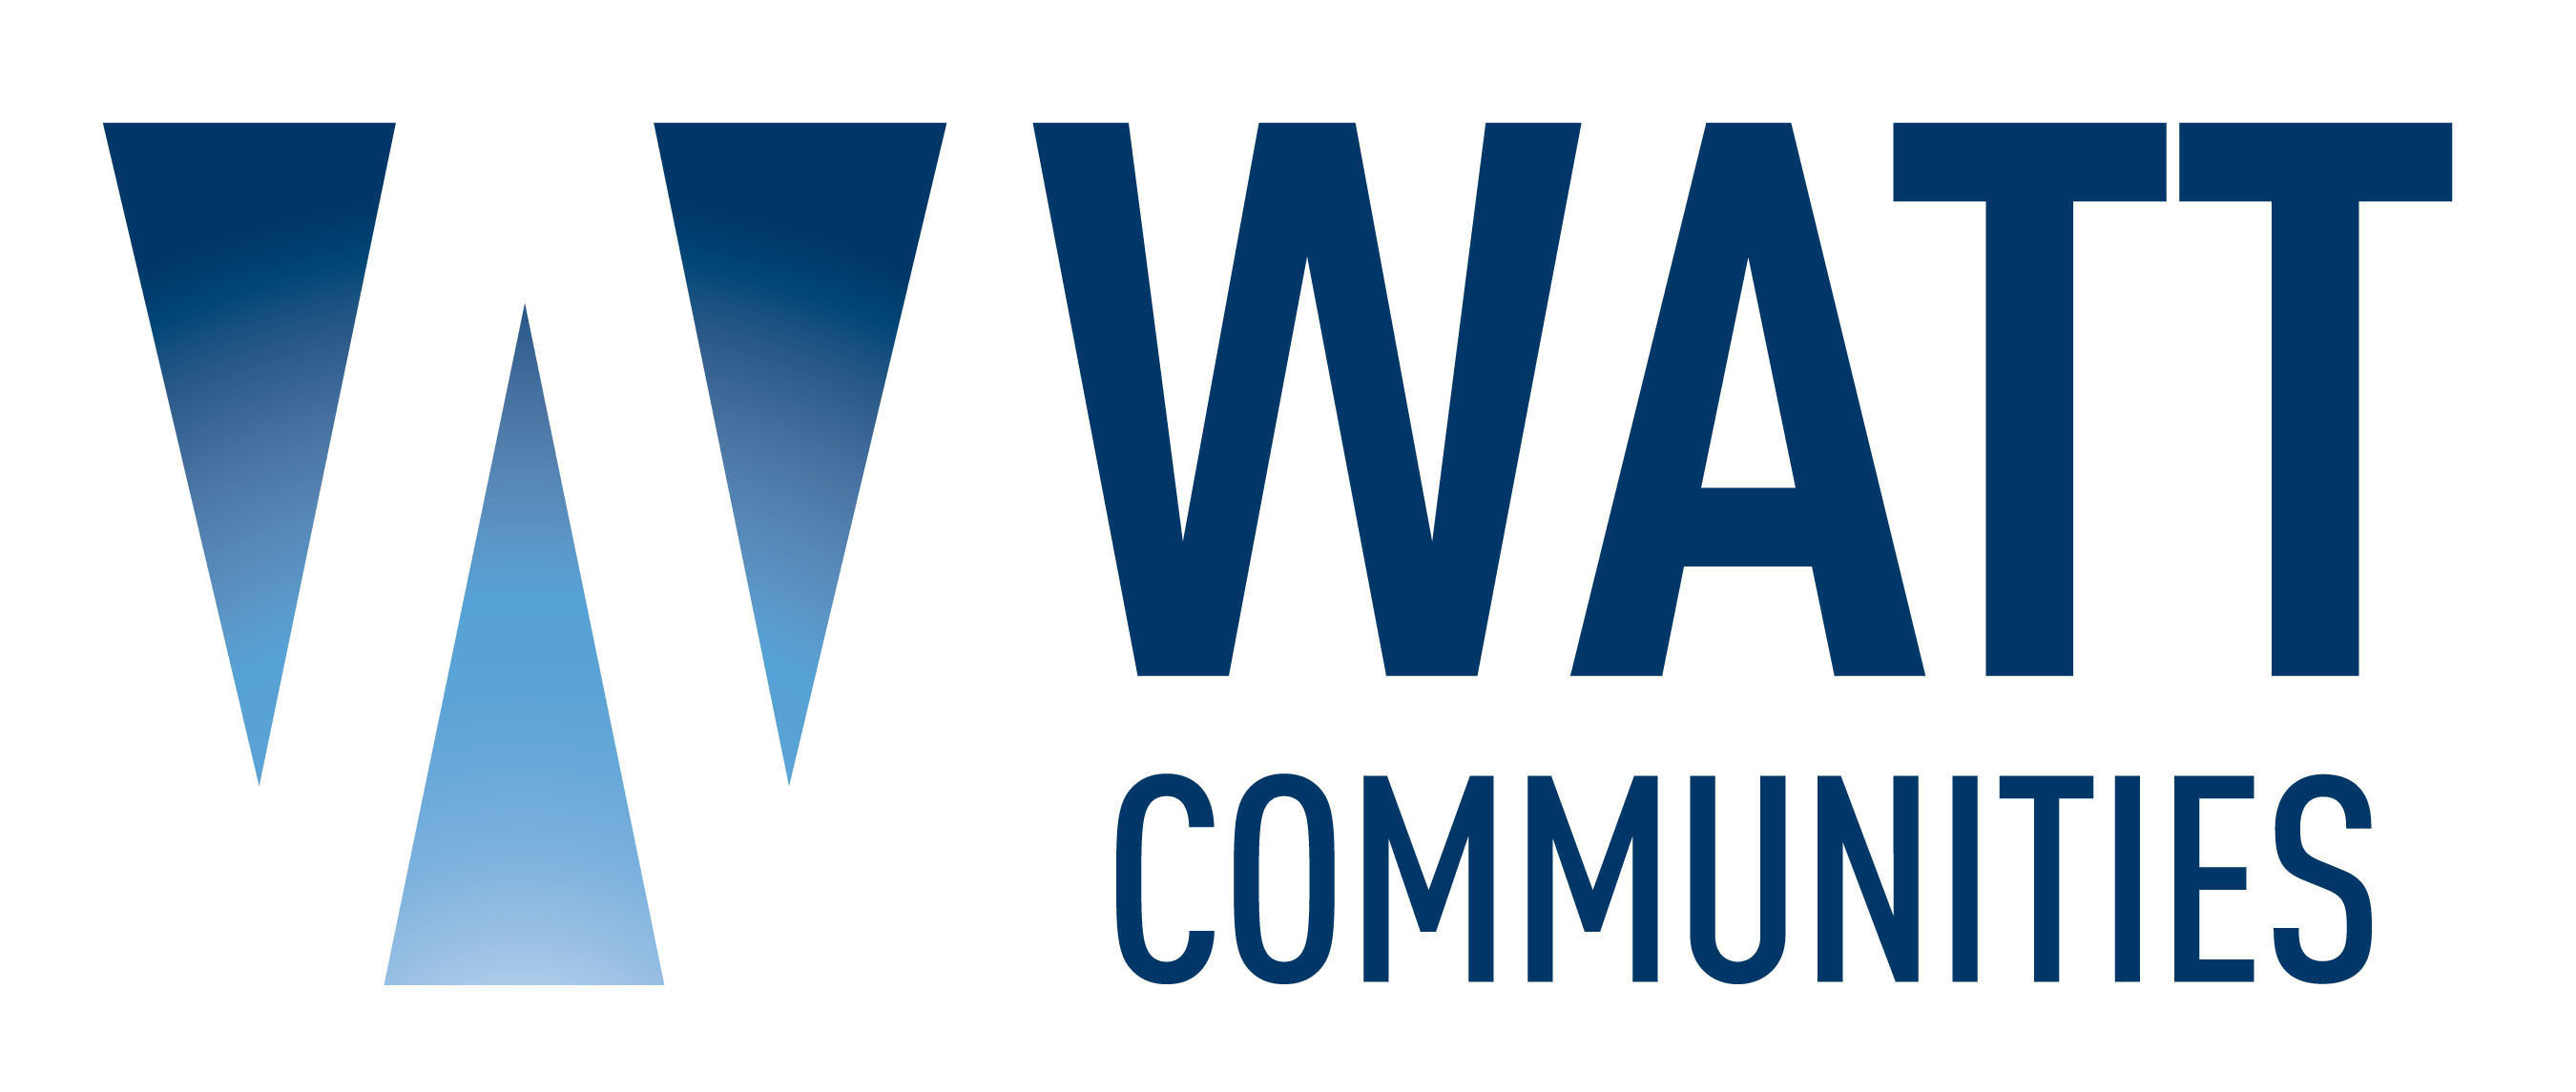 WATT COMMUNITIES Logo.